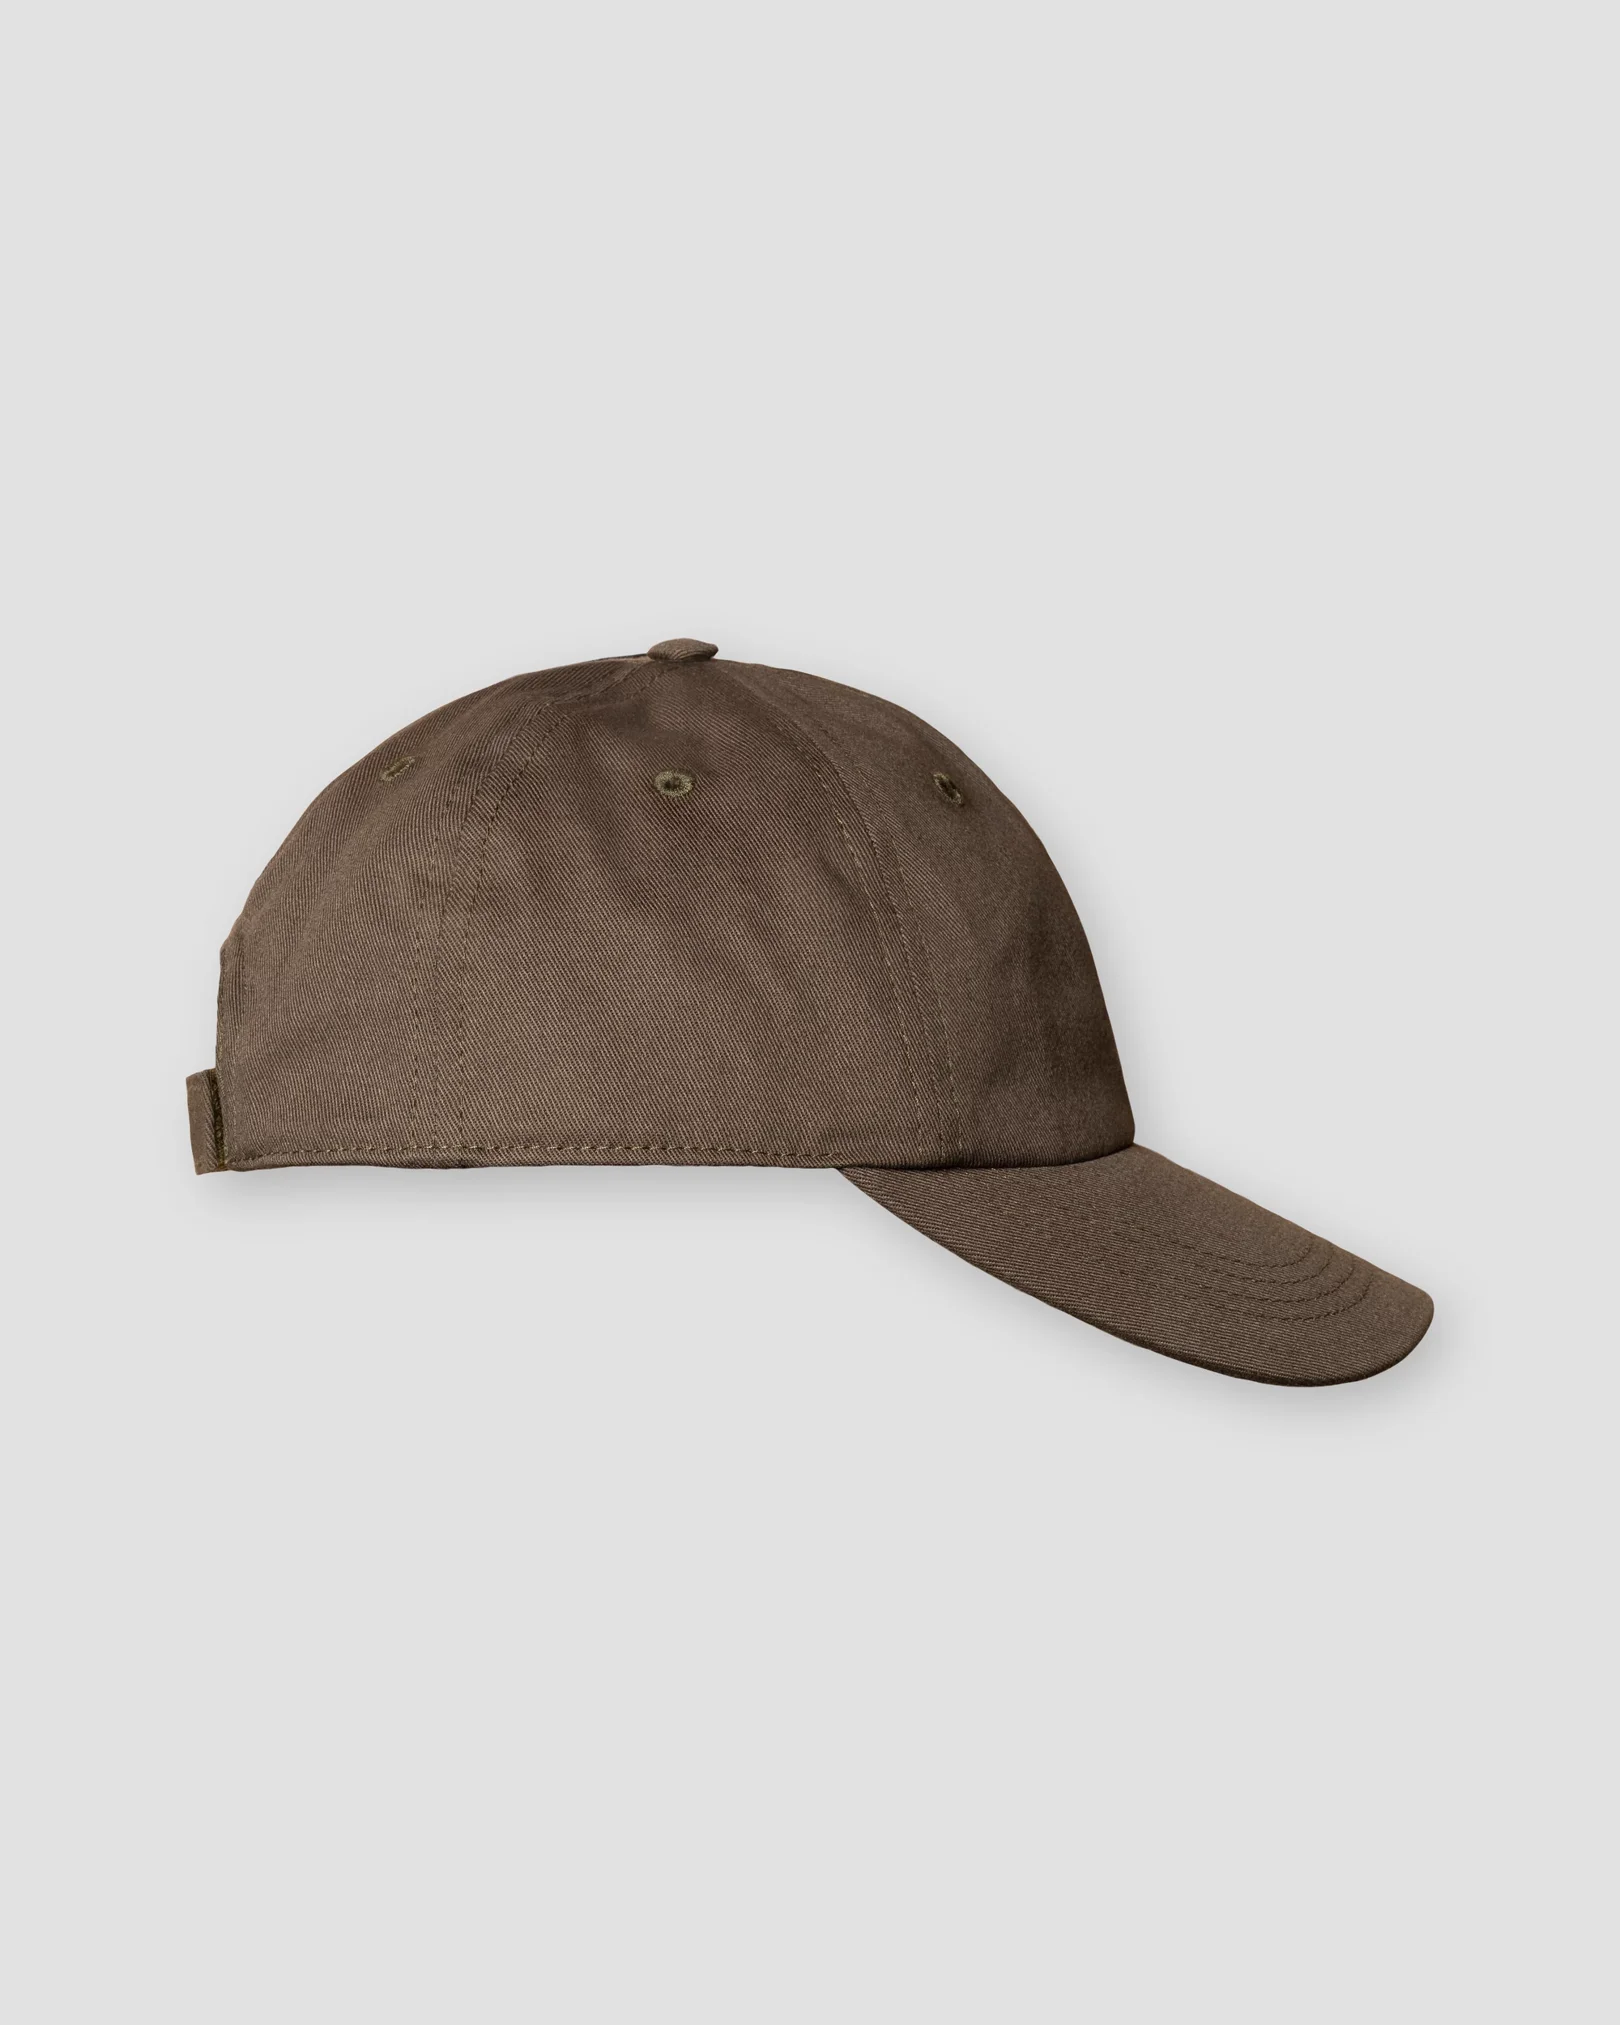 Eton - dark green casual baseball cap